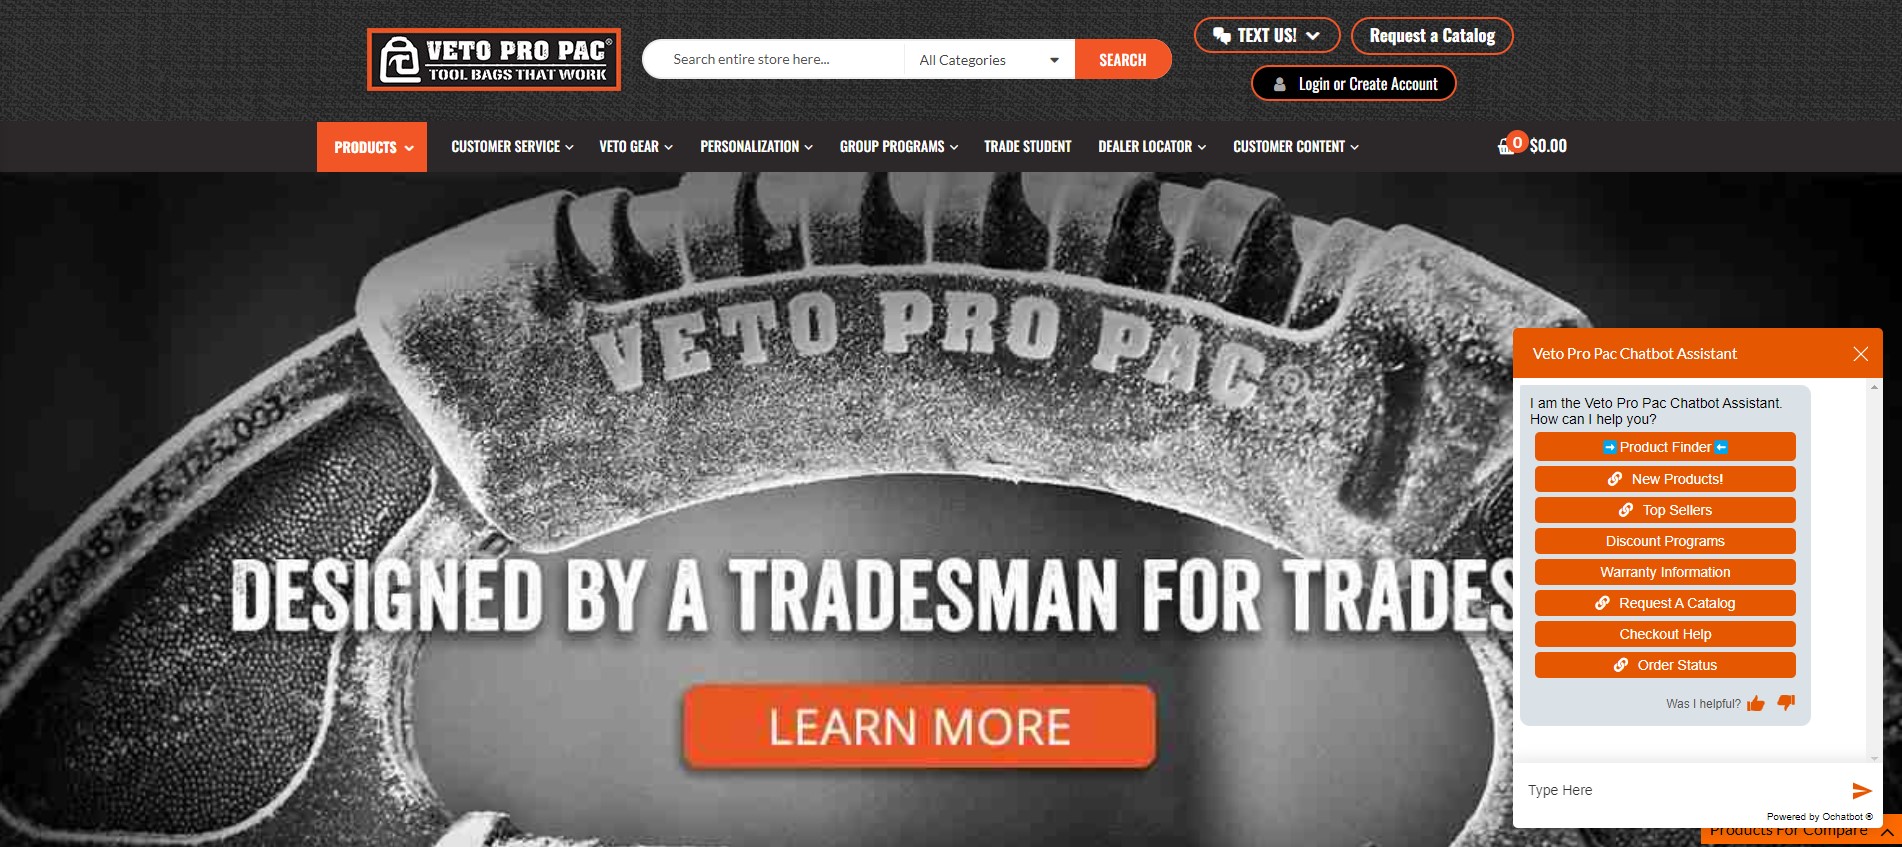 Screen shot of the Veto Pro Pac Homepage